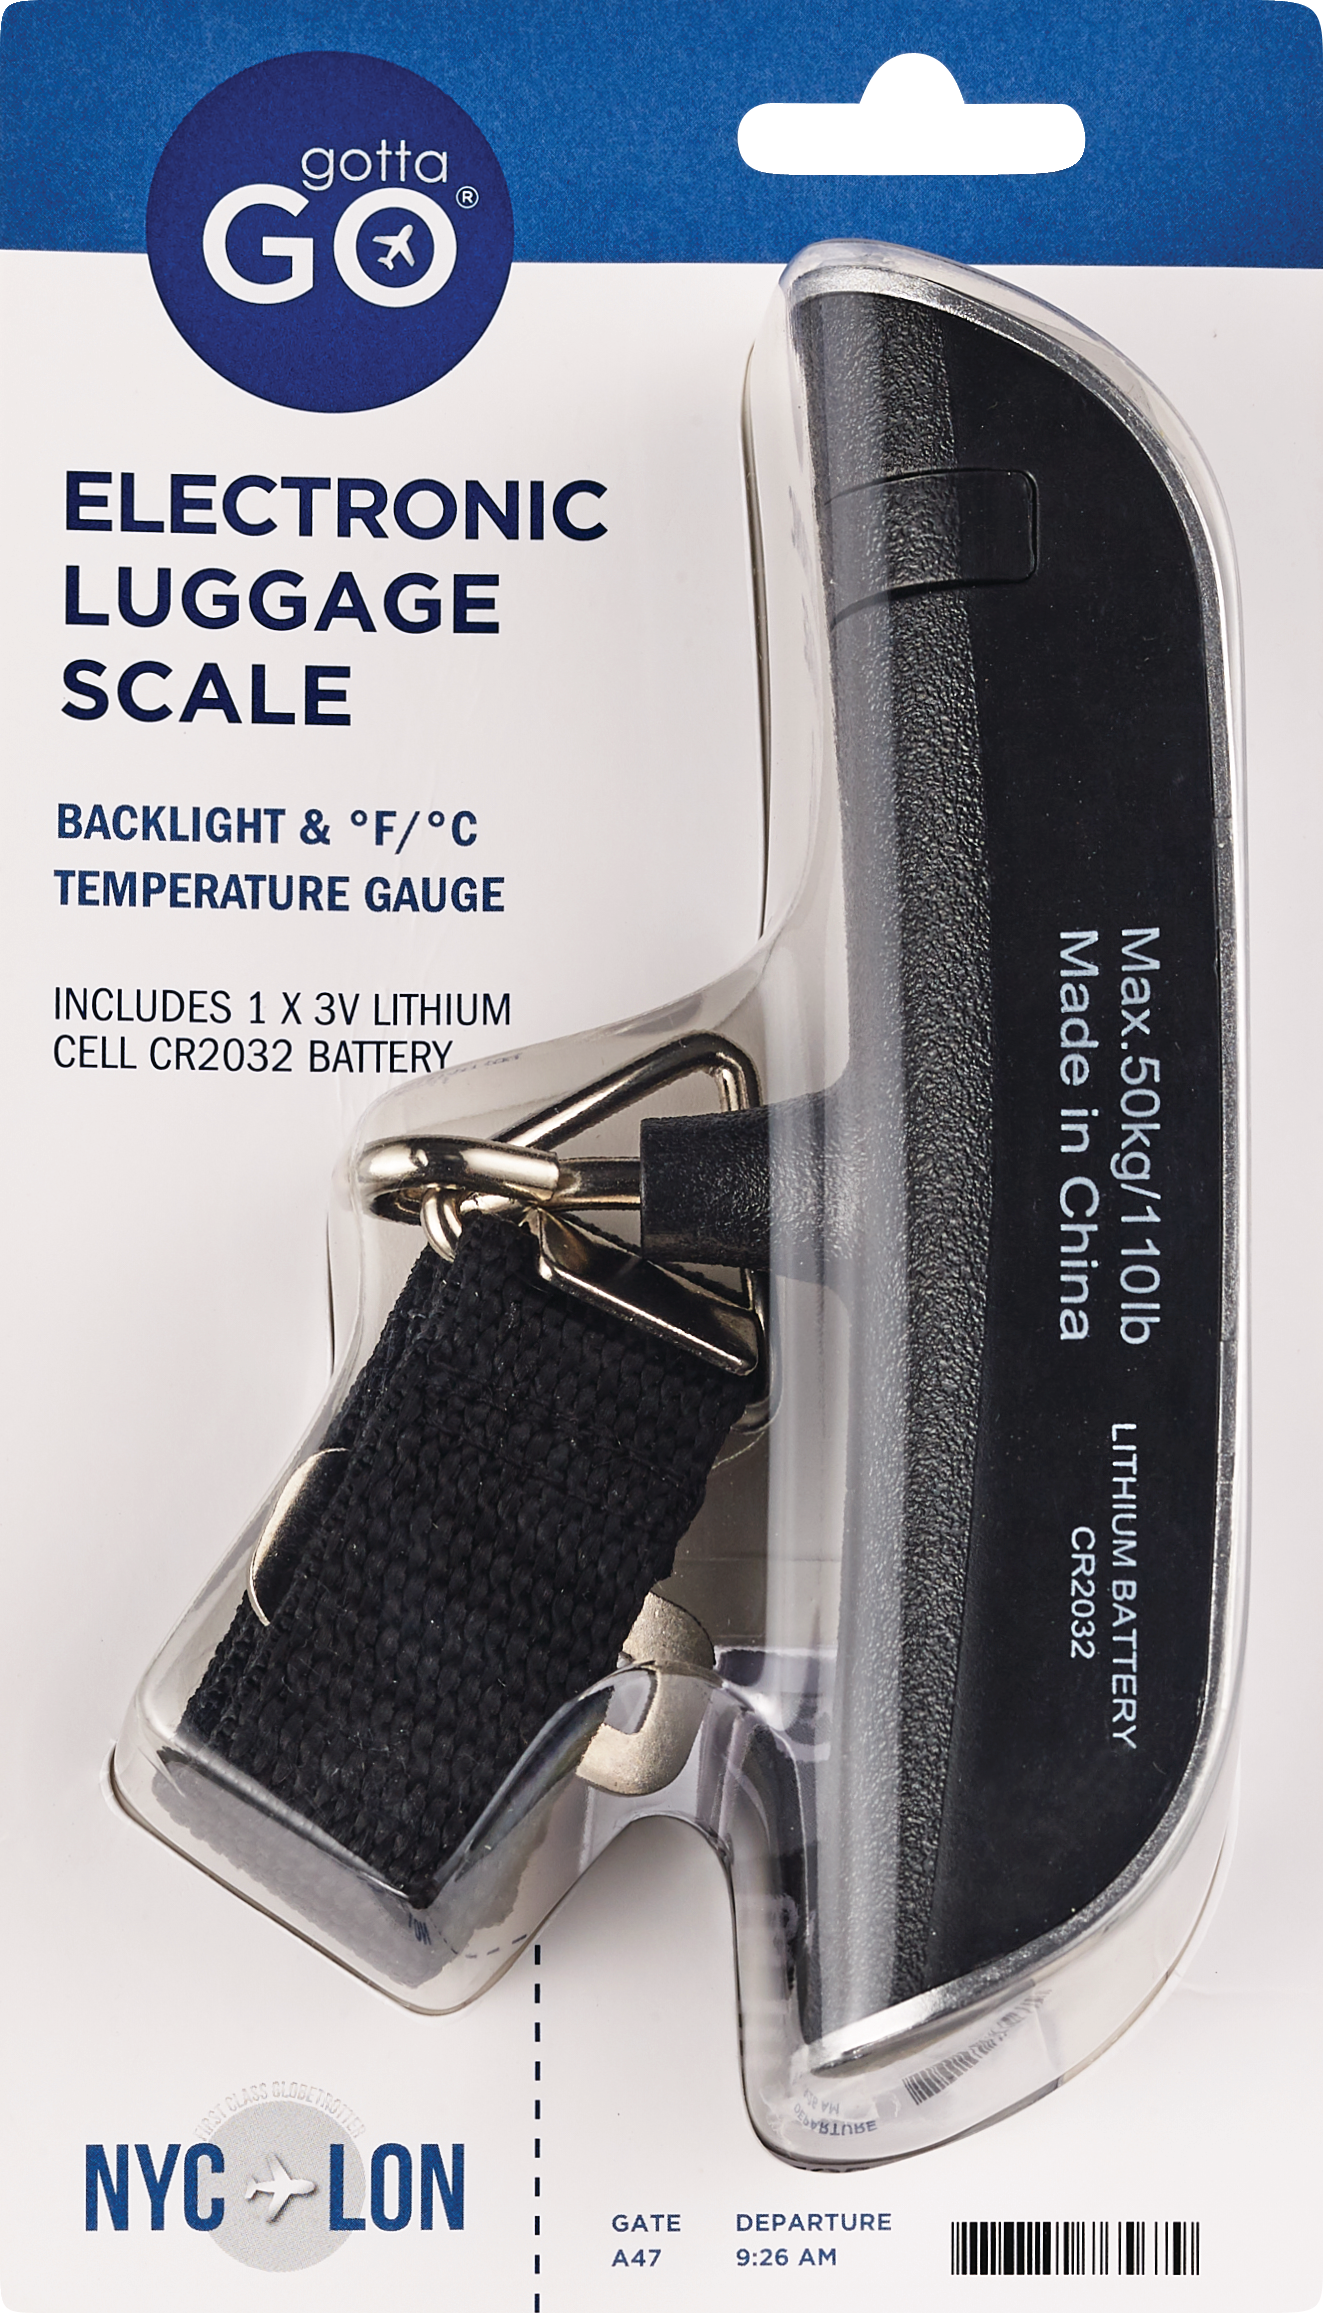 Gotta Go Electronic Luggage Scale